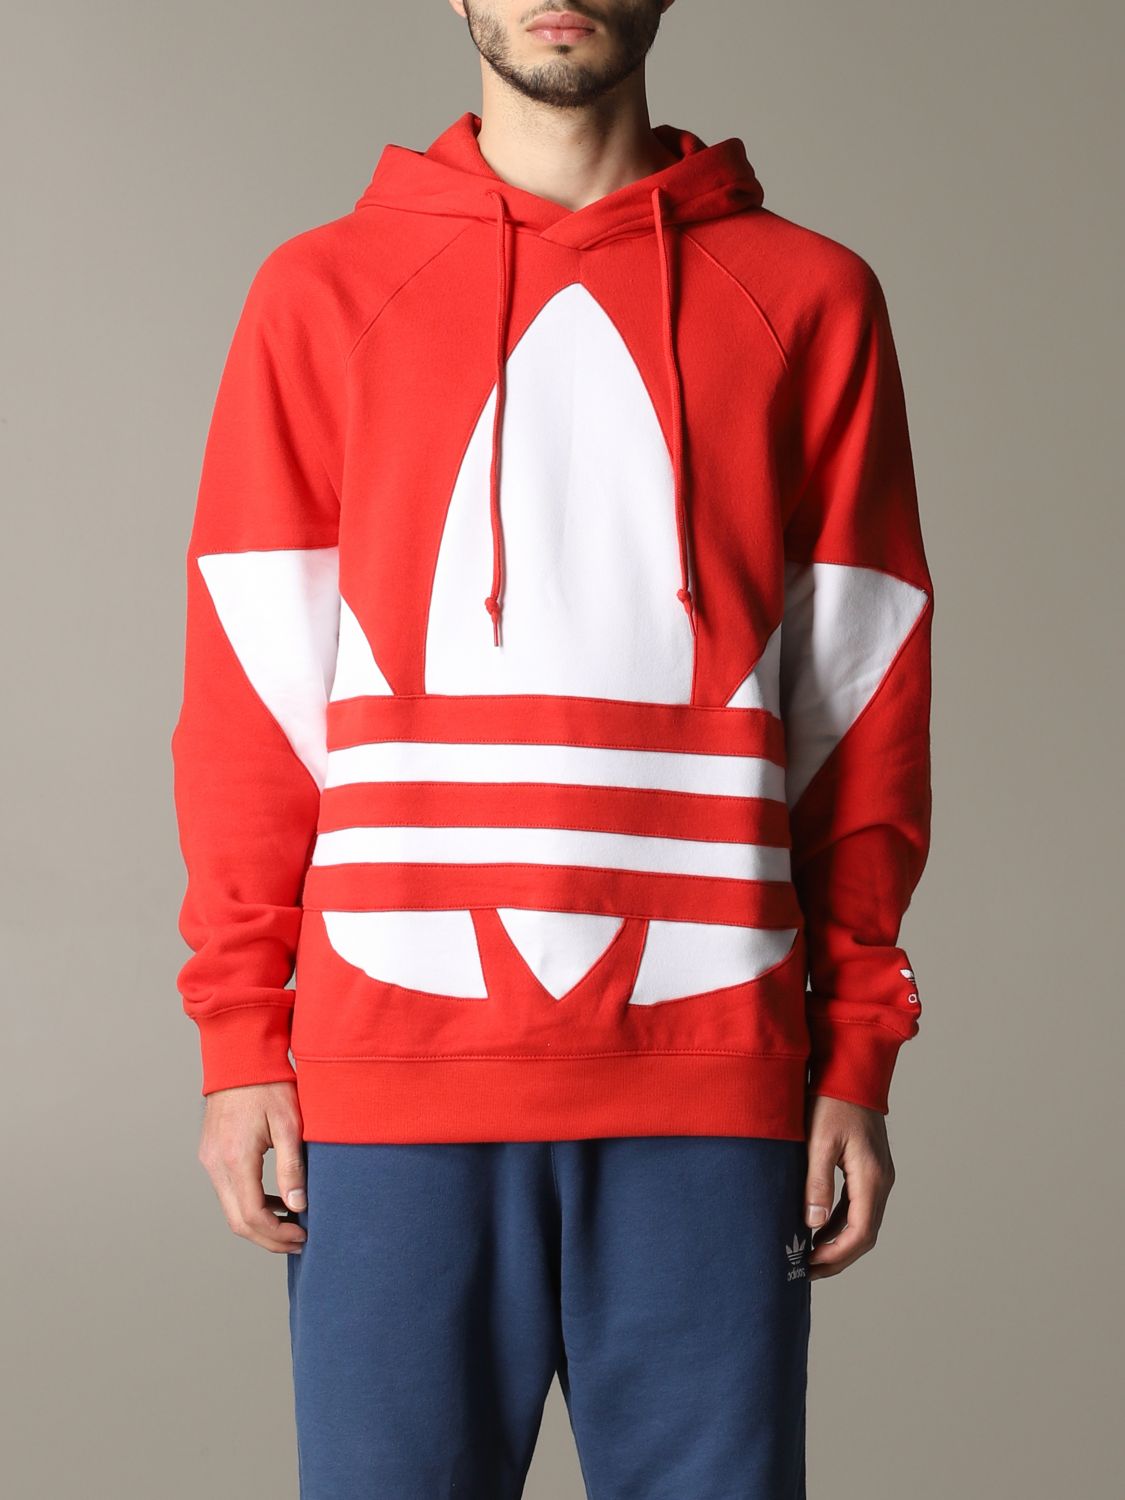 adidas originals red hoodie